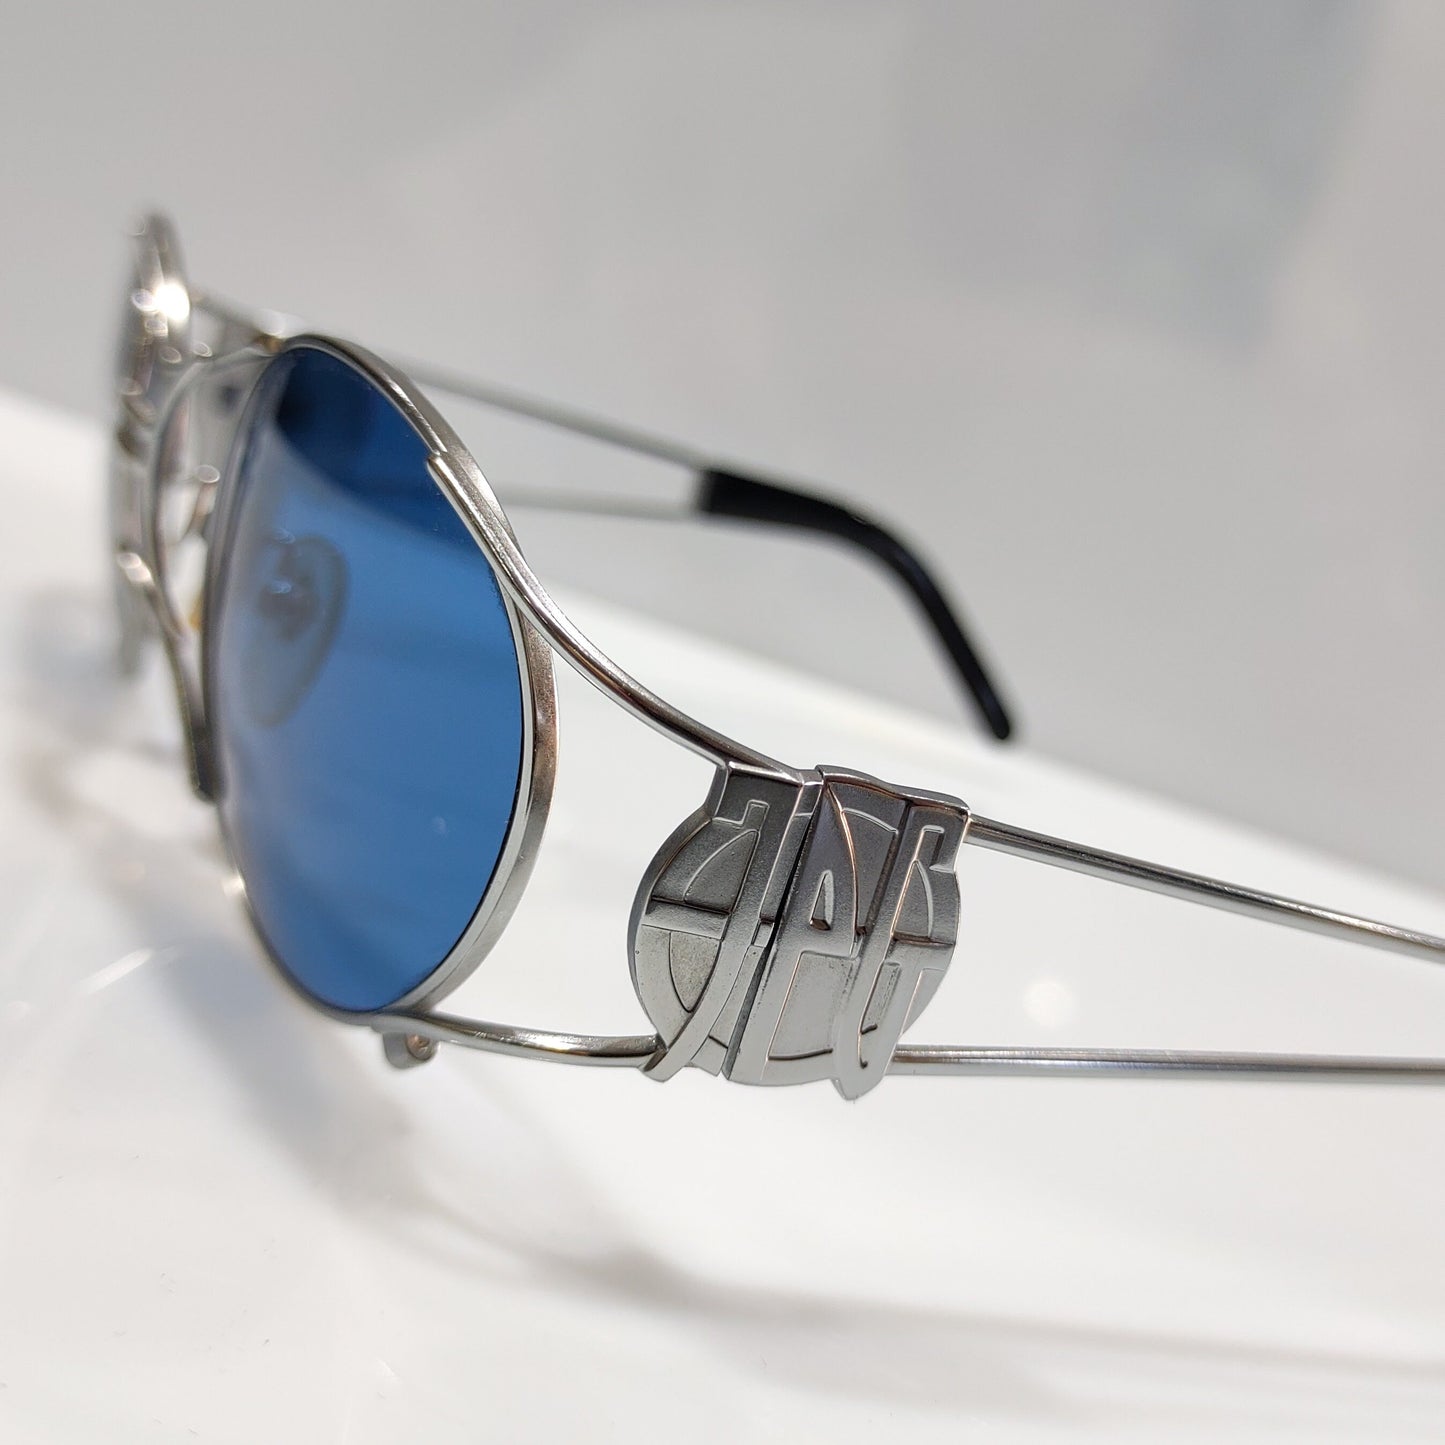 Jean Paul Gaultier 58 6101 occhiali da sole vintage steampunk lunette brille occhiali sole gafas